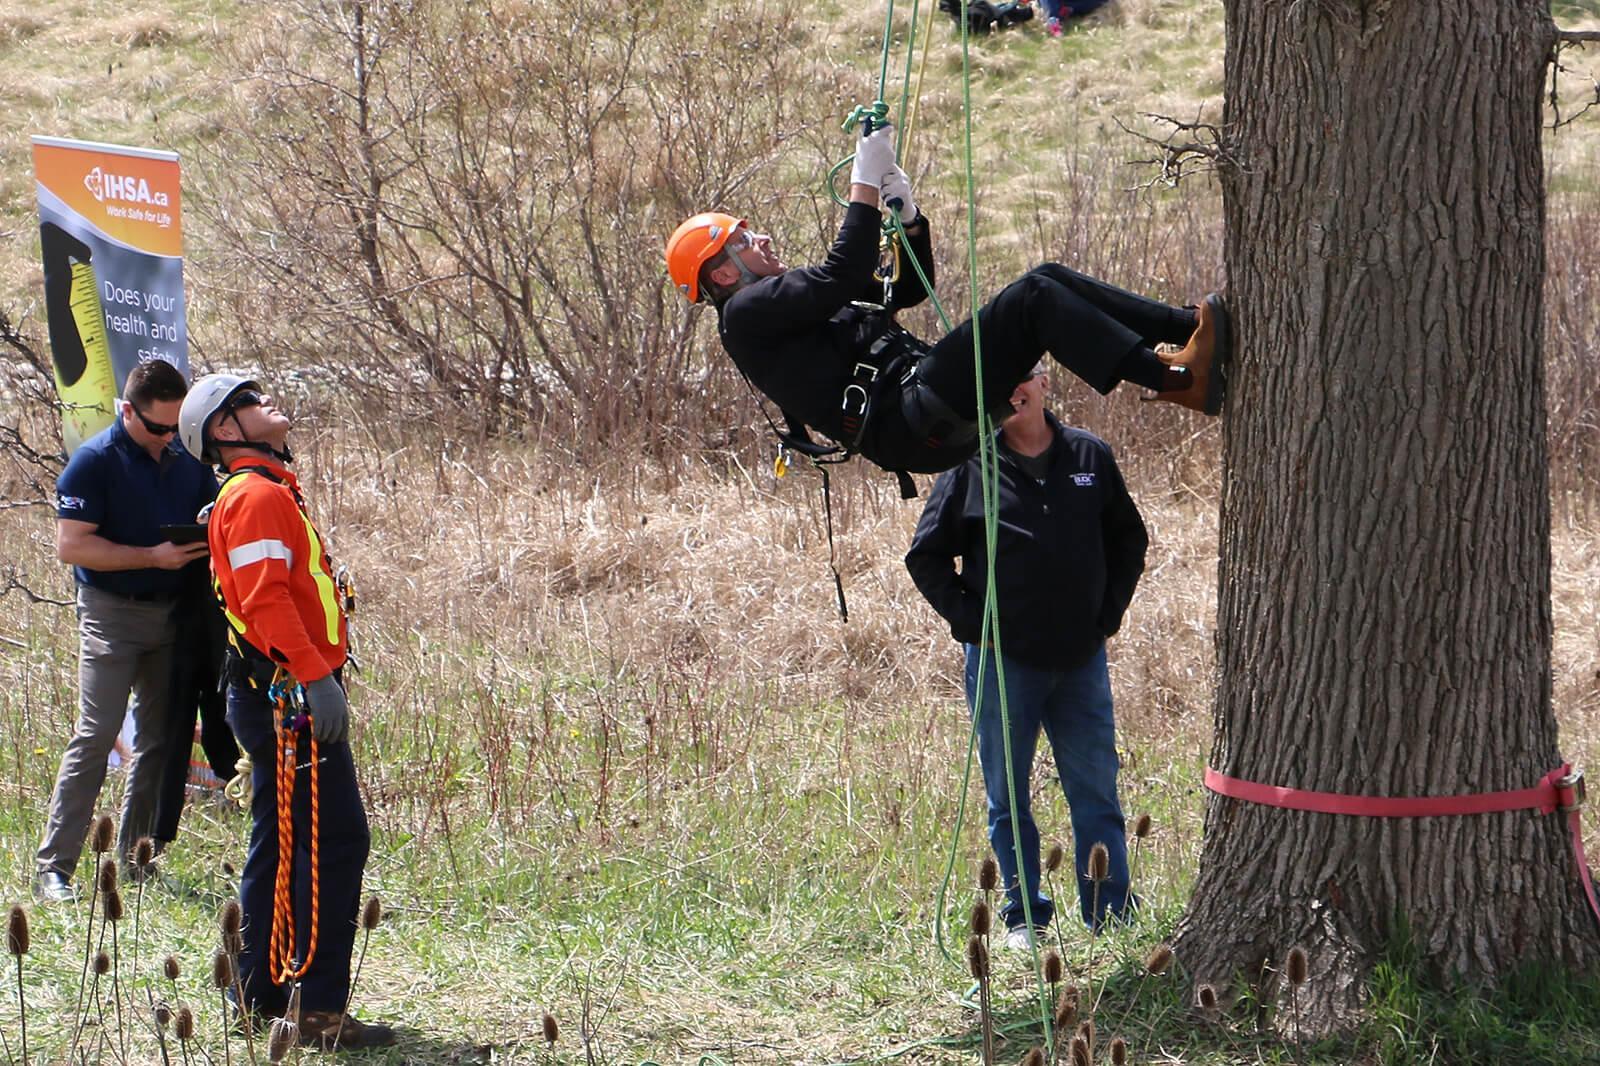 29th Annual Tree Climbing Championship